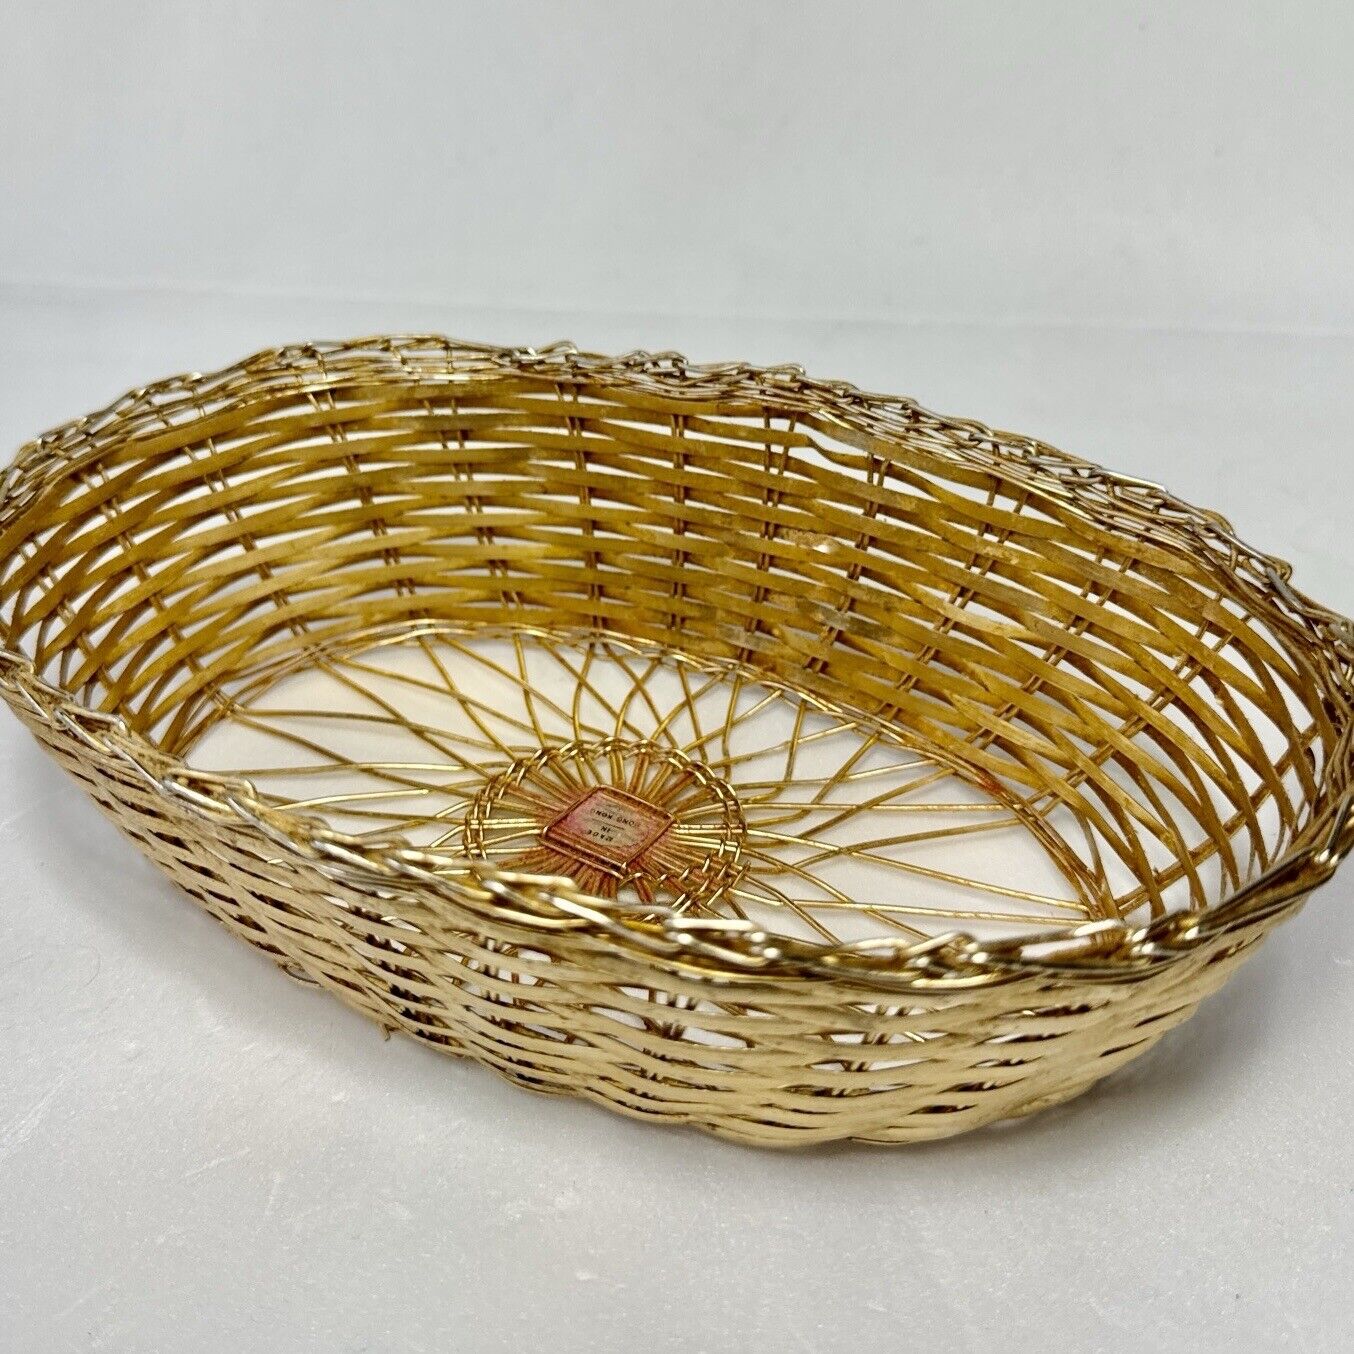 Vintage Gold Tone Oval Woven Wire Basket Organize Storage Decor